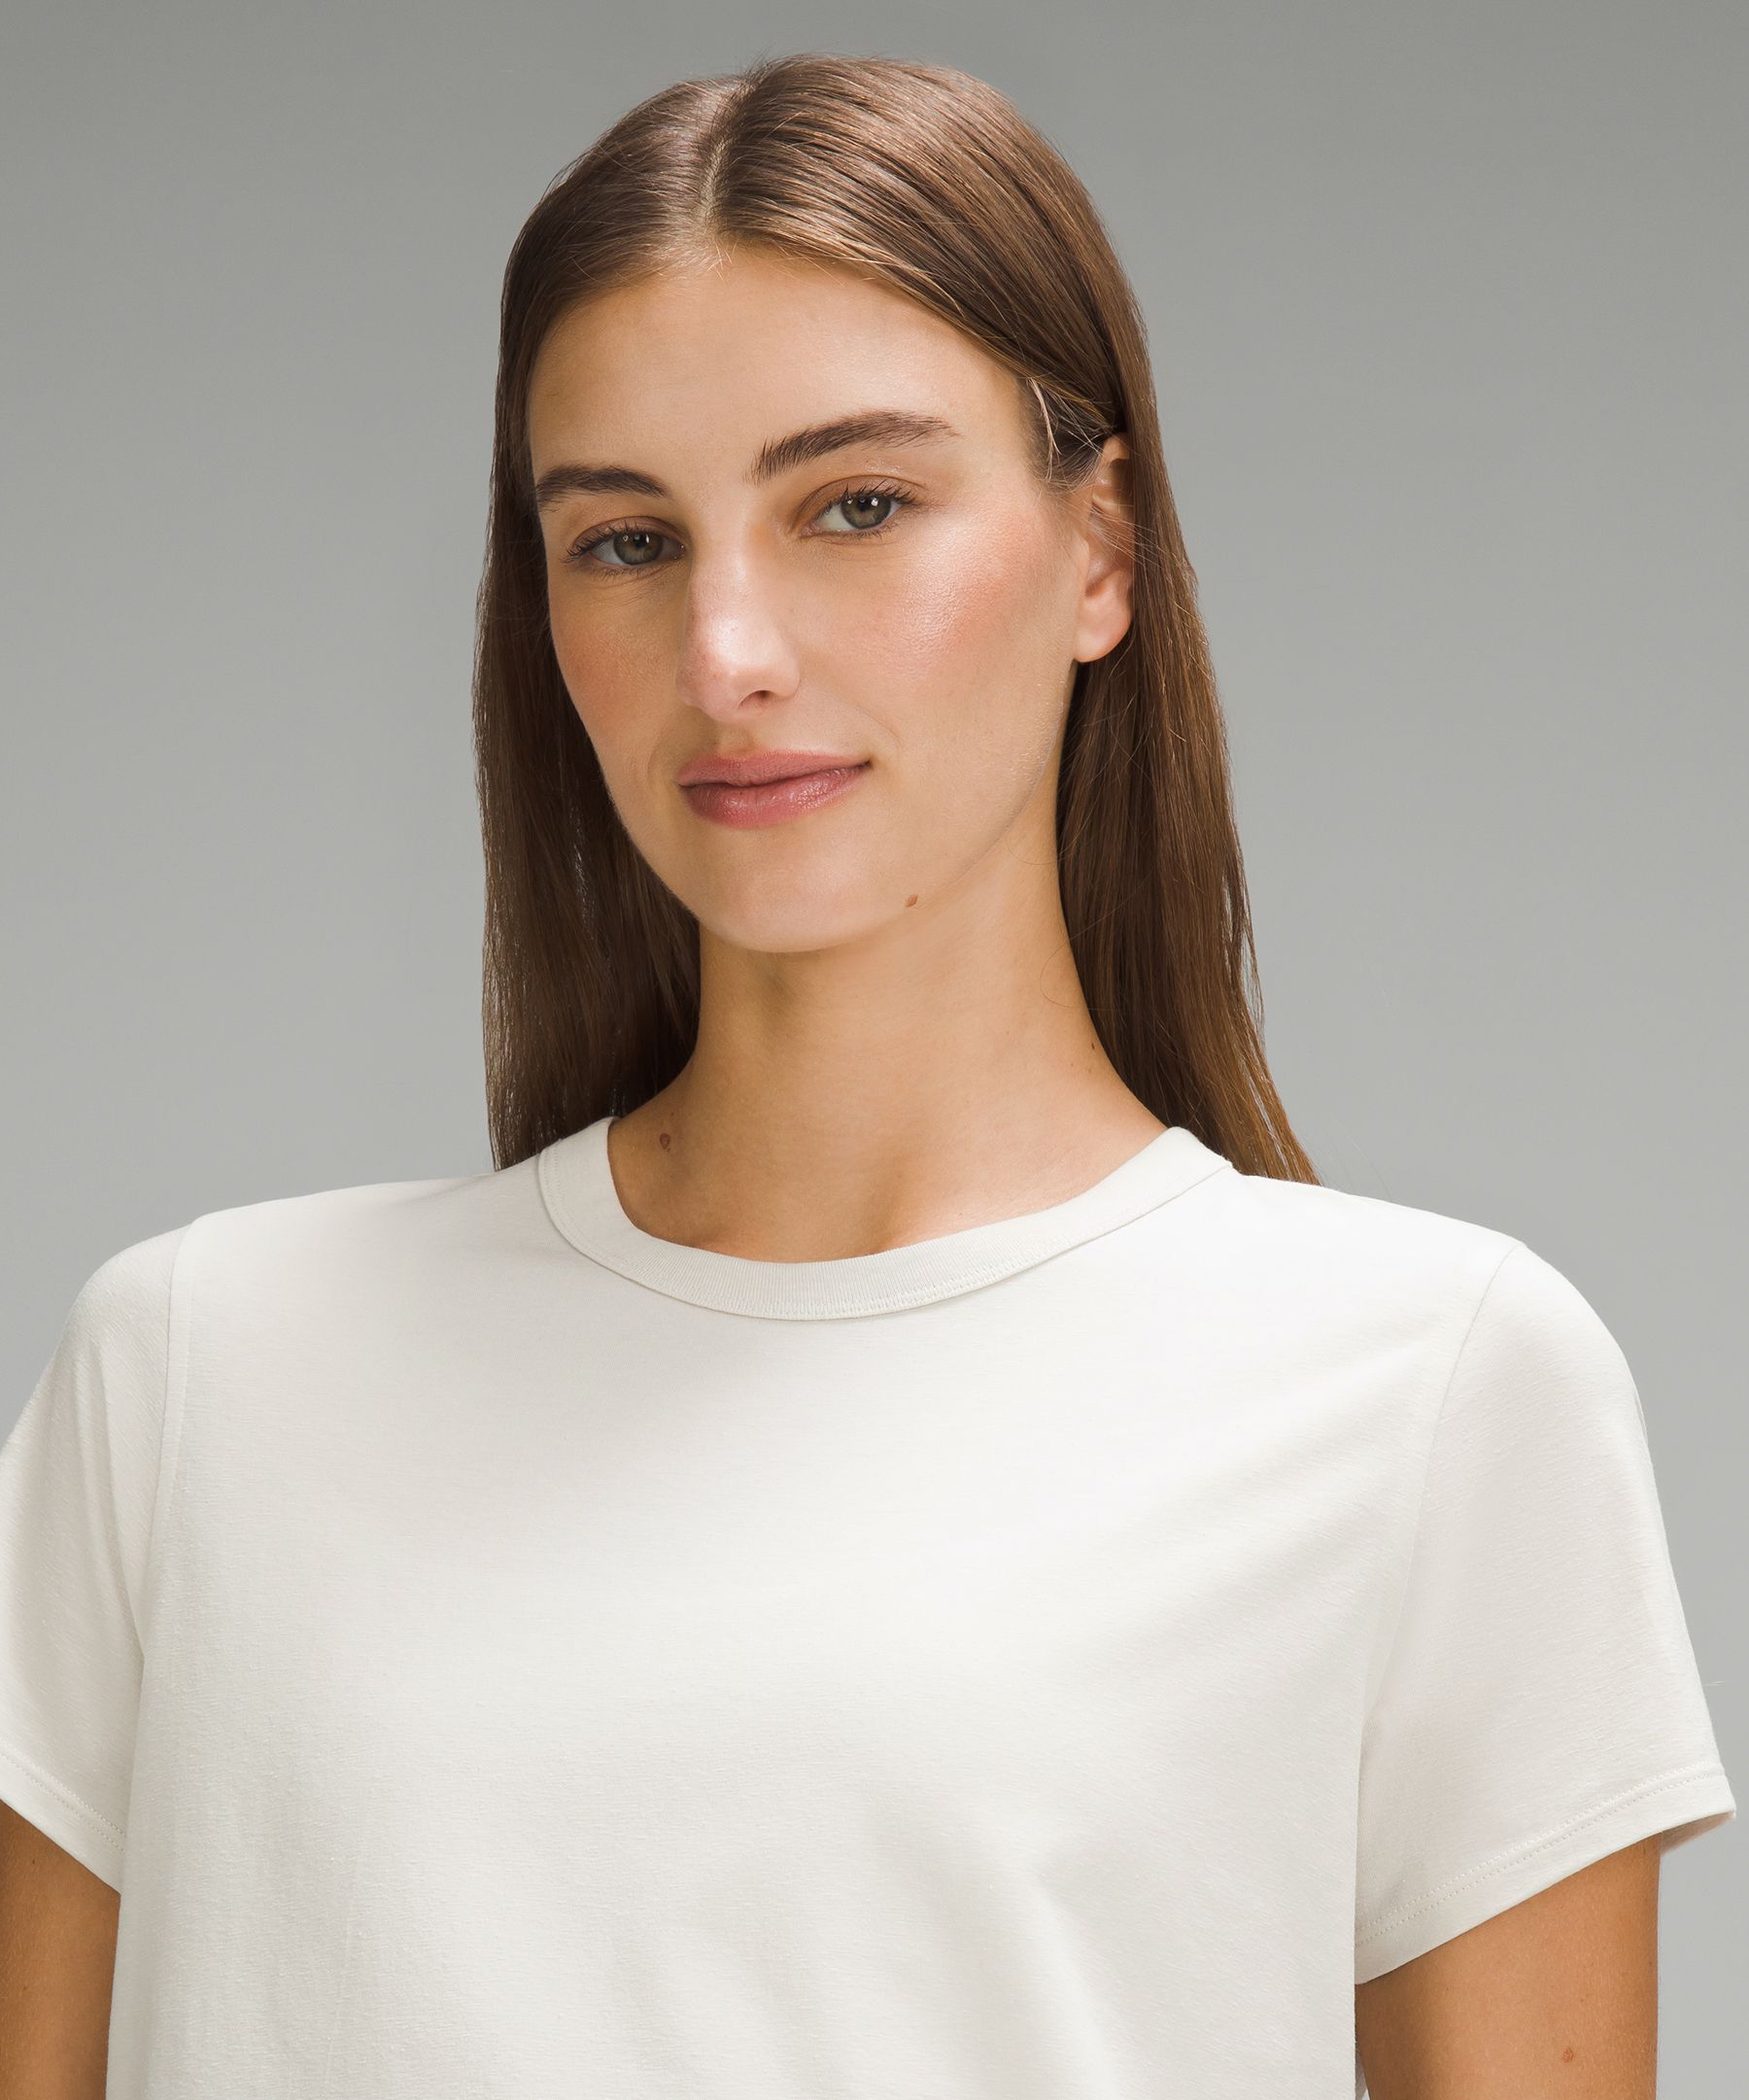 Classic-Fit Cotton-Blend T-Shirt | Women's Short Sleeve Shirts